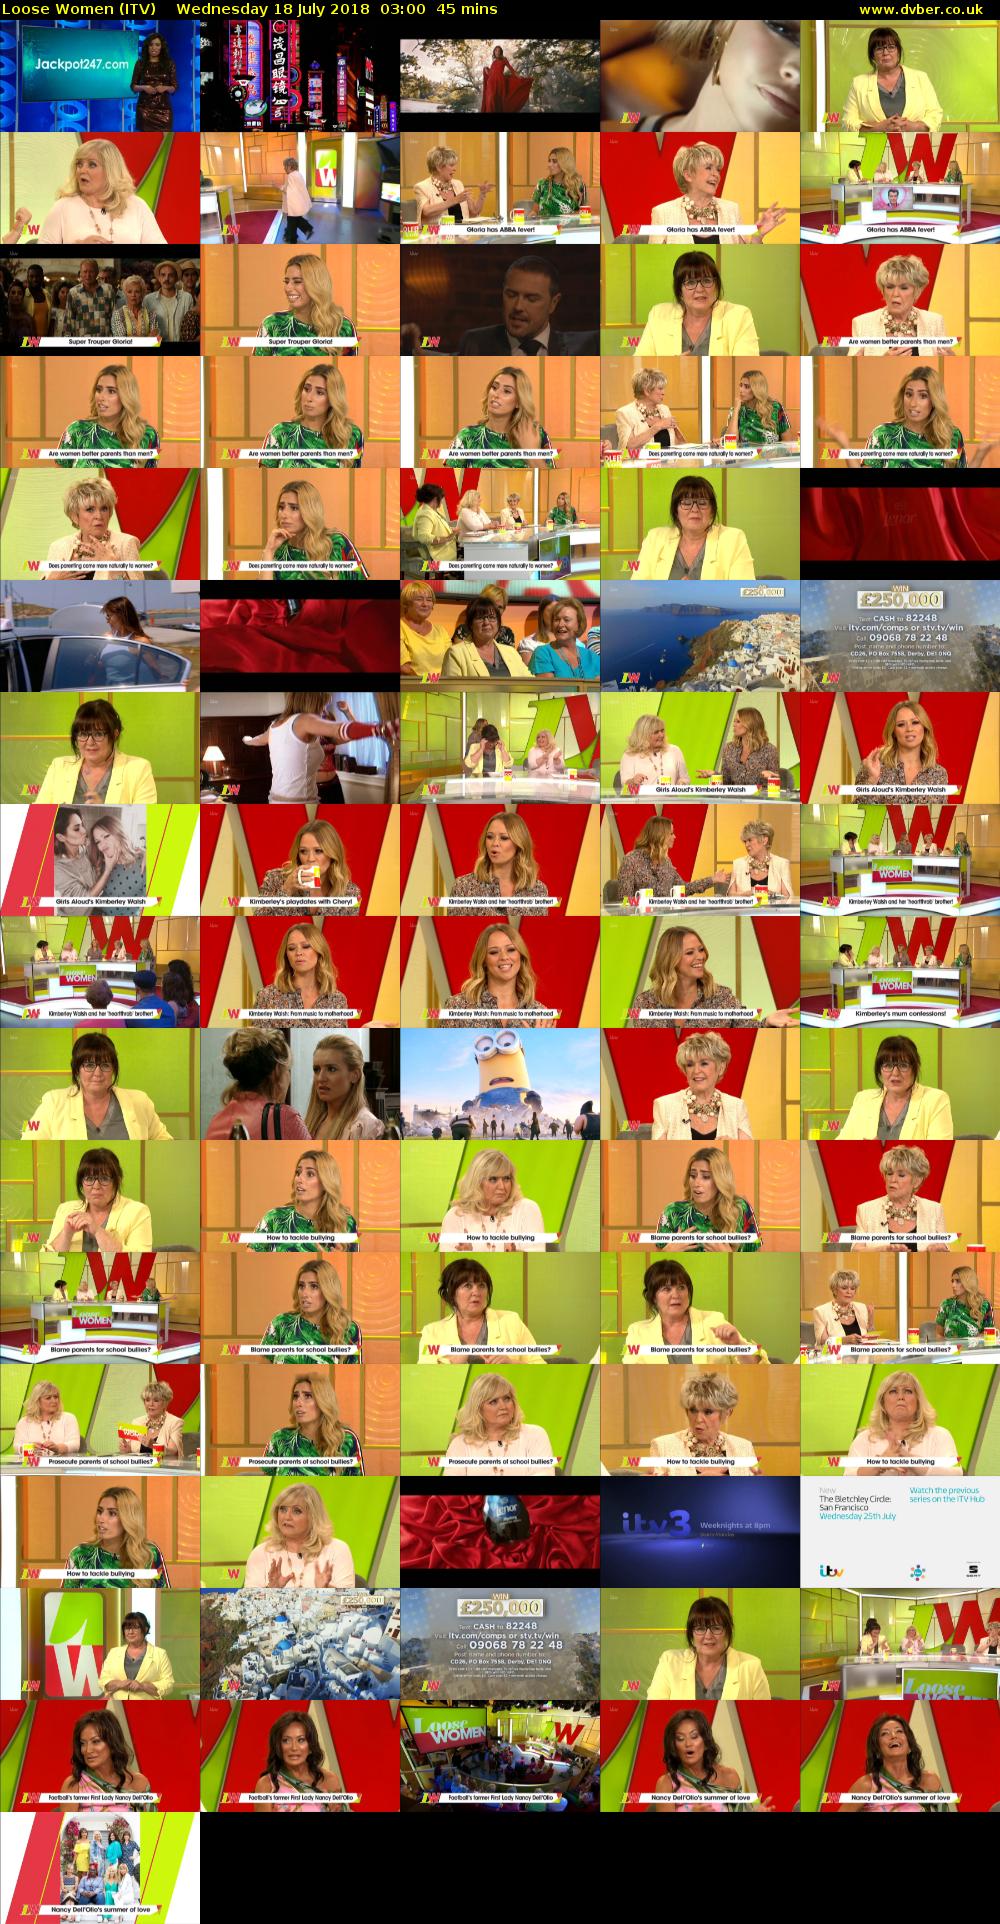 Loose Women (ITV) Wednesday 18 July 2018 03:00 - 03:45